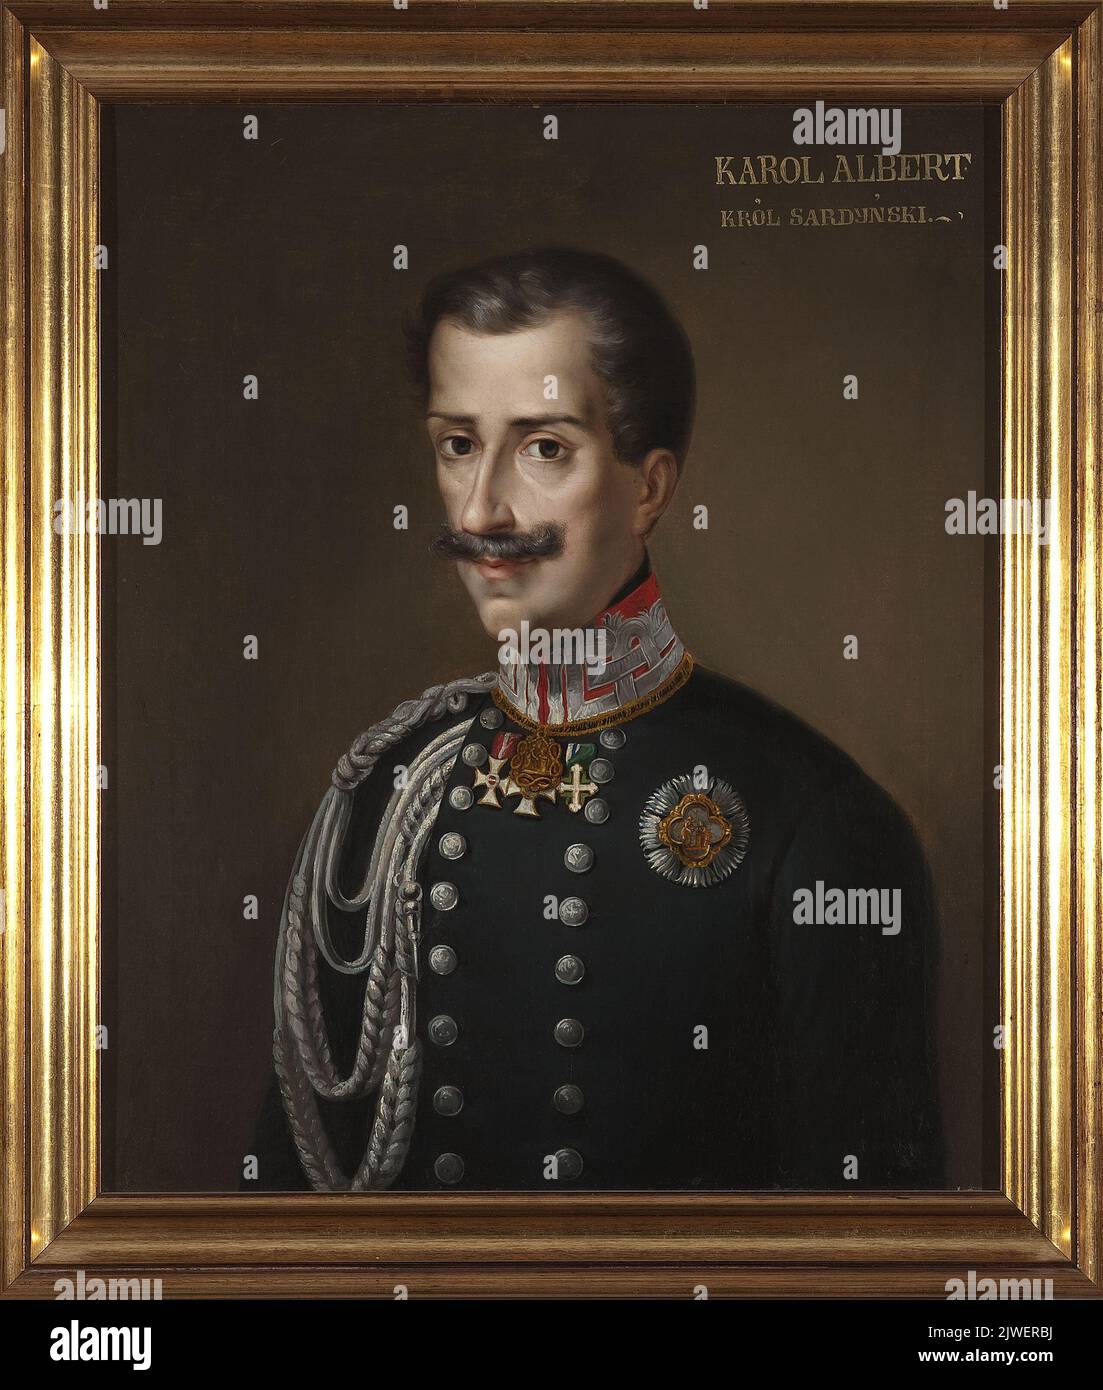 Portraif von Karl Albert, König von Sardinien. nieznany malarz polski, Maler Stockfoto